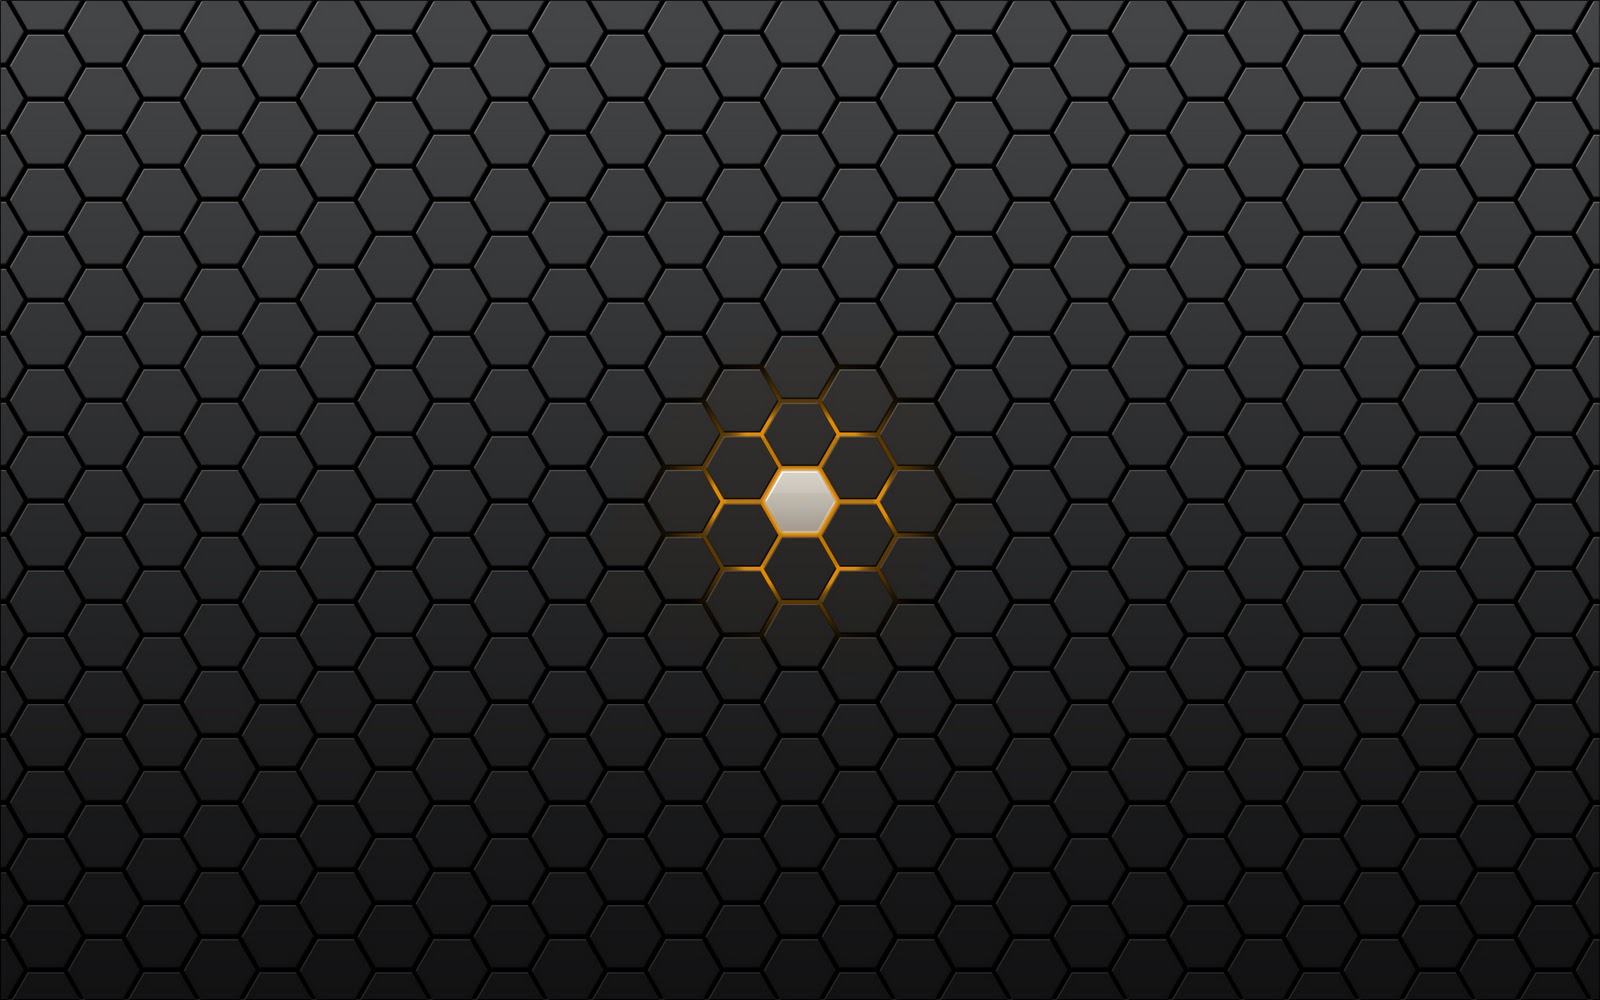 Hexagonal+grid+maker